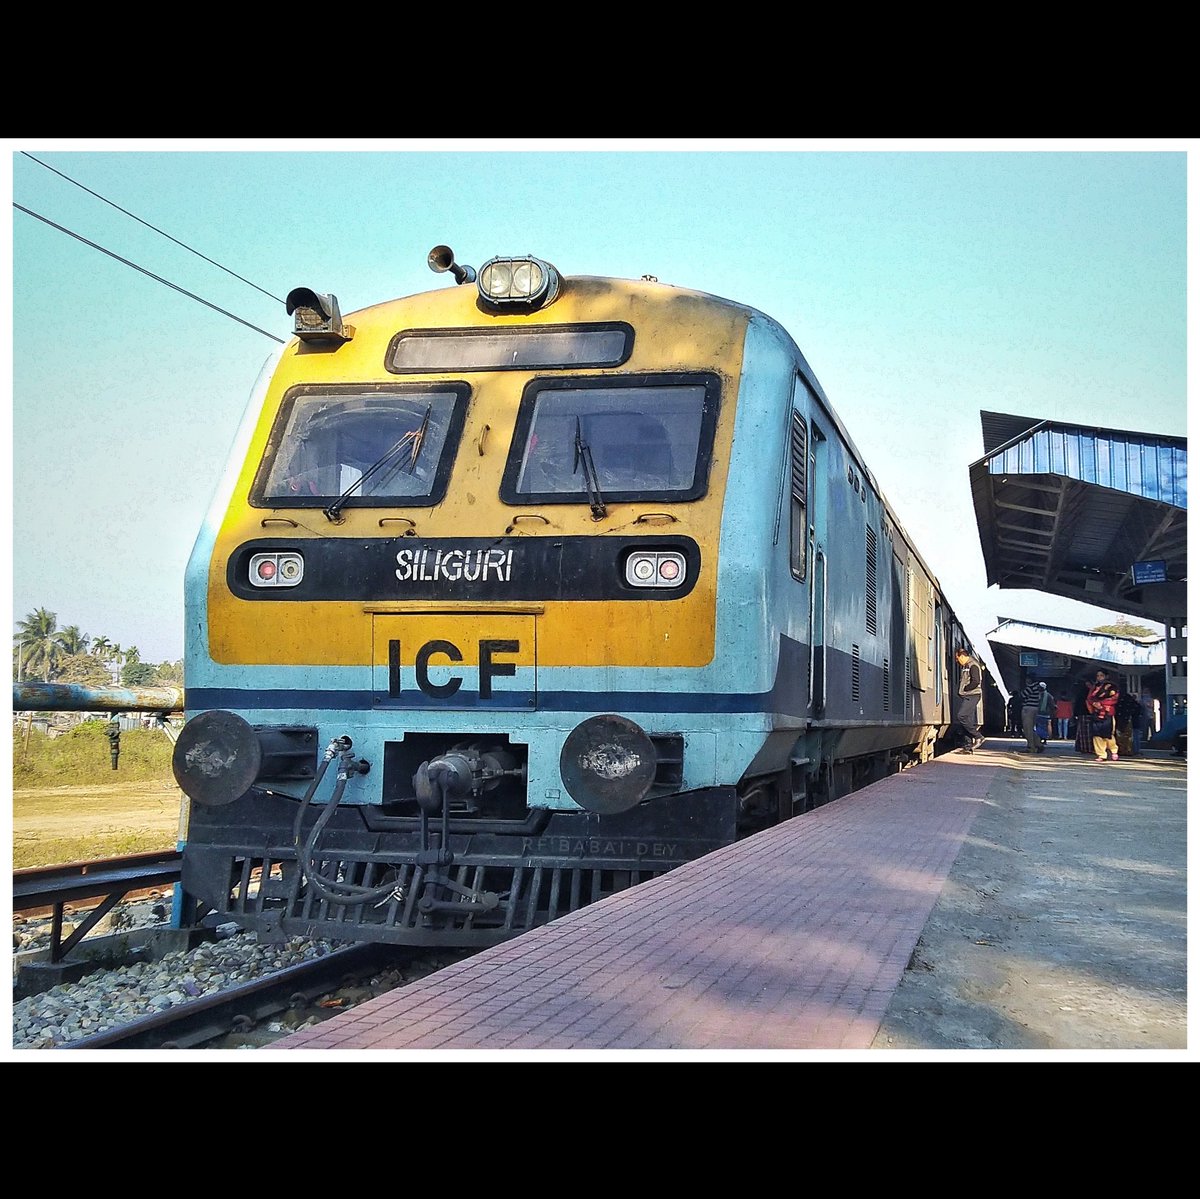 Video link --> youtu.be/SqH8paqhdac

#NEWBONGAIGAON ➡️ #DHUBRI: Complete DEMU #TrainJourney by 07526 #NewBongaigaon–#SiliguriJunction DEMU Special | #IndianRailways
.
.
#NFRailEnthusiastsOG
.
.
.
.
@drm_apdj @drm_kir @DRM_RNY @RailNf @RailMinIndia @AshwiniVaishnaw #NFRailway